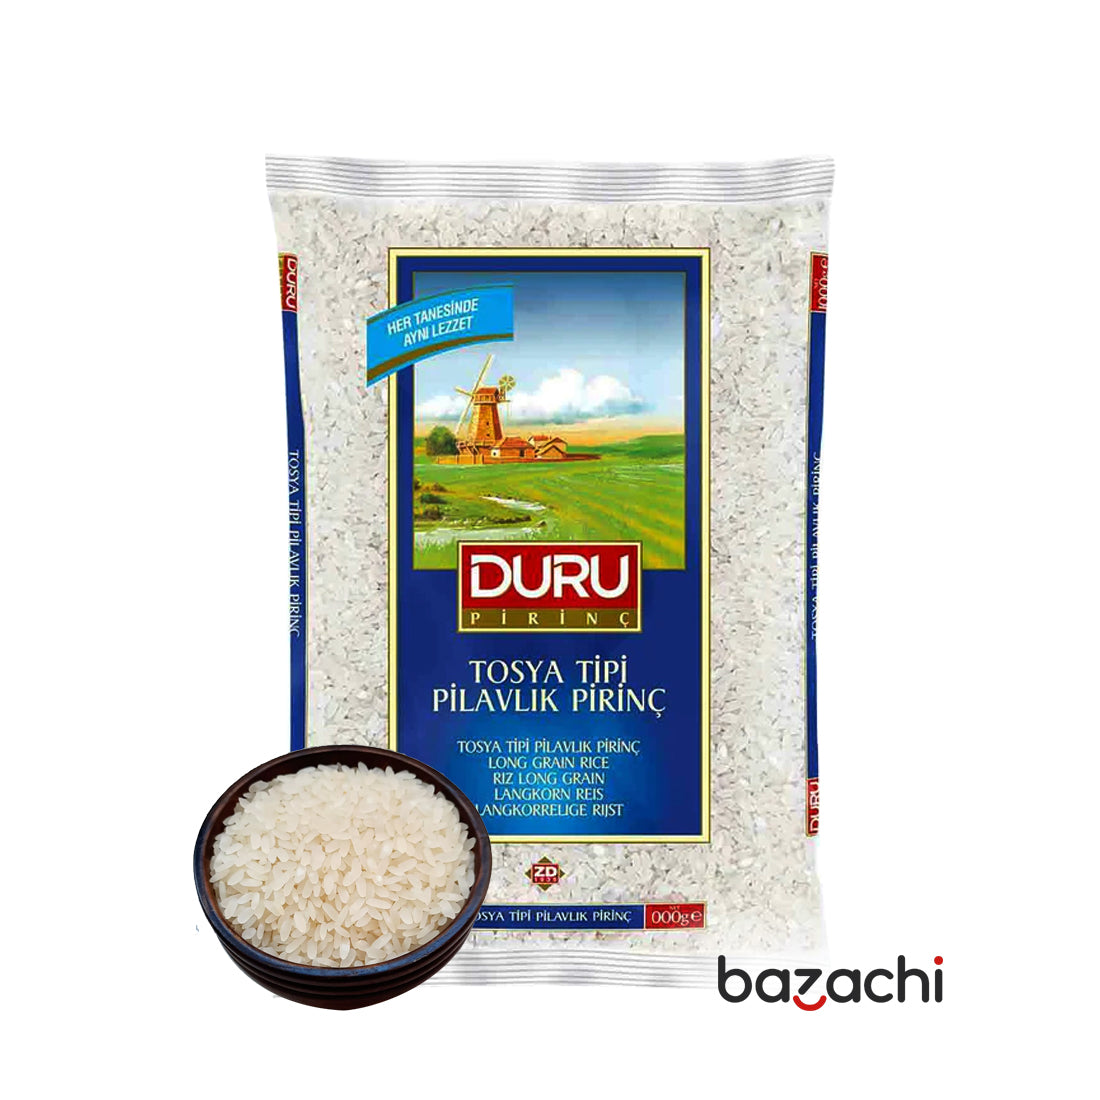 Duru Rice Tosya Tipi Pilavlik Pirinc 5kg